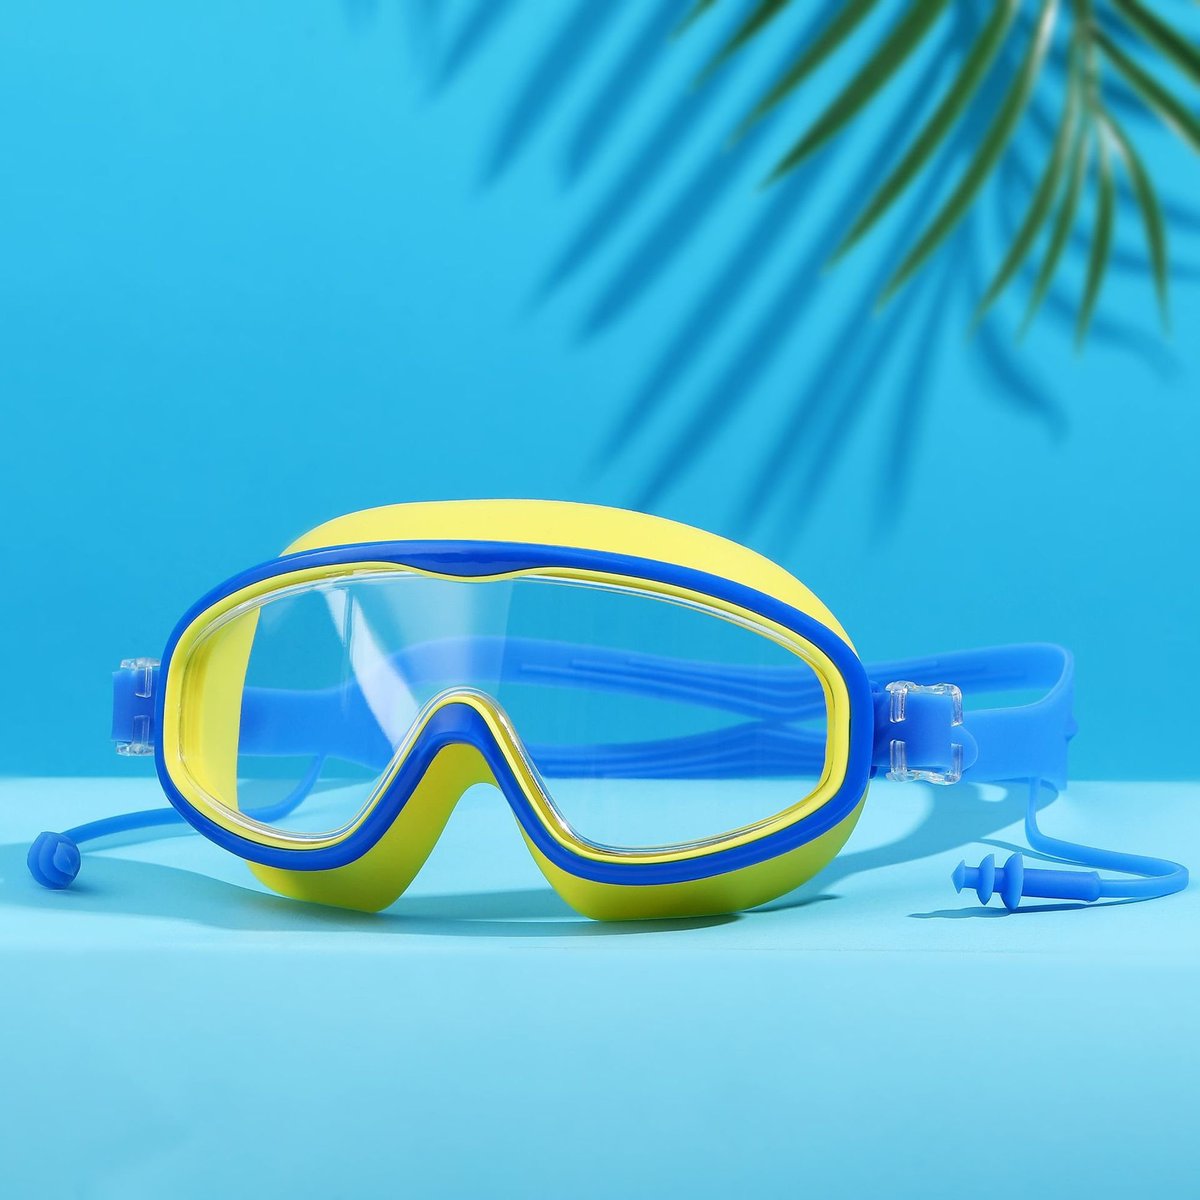 Waterproof and Anti-fog Swimming Goggles